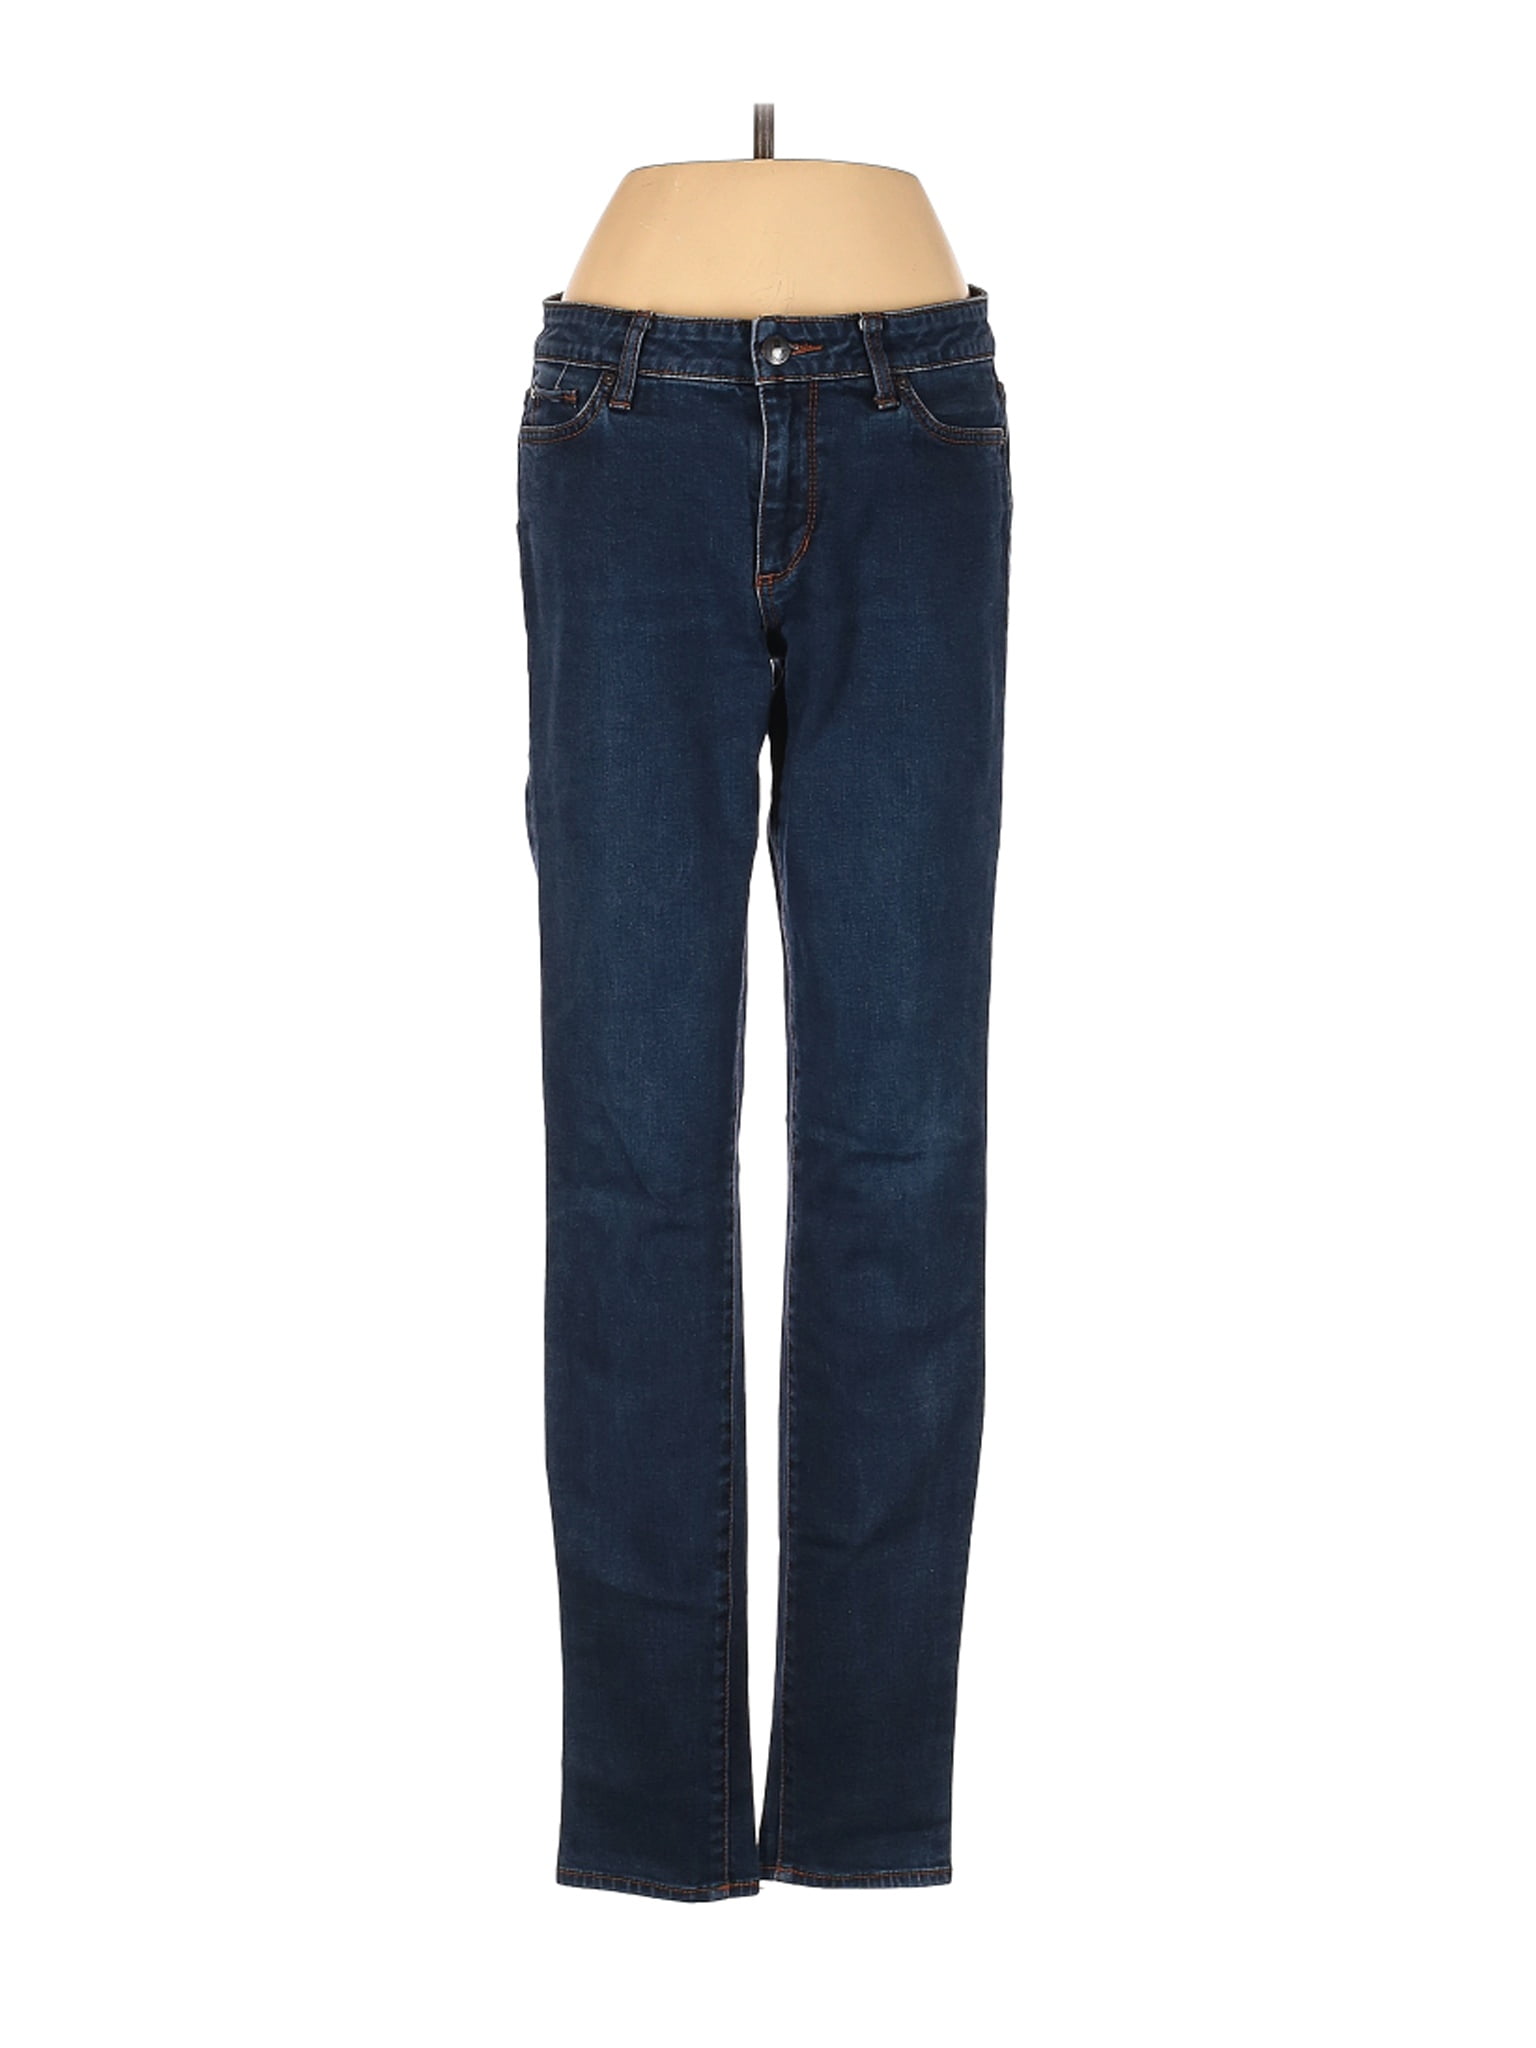 Else Jeans - Pre-Owned Else Jeans Women's Size 27W Jeans - Walmart.com ...